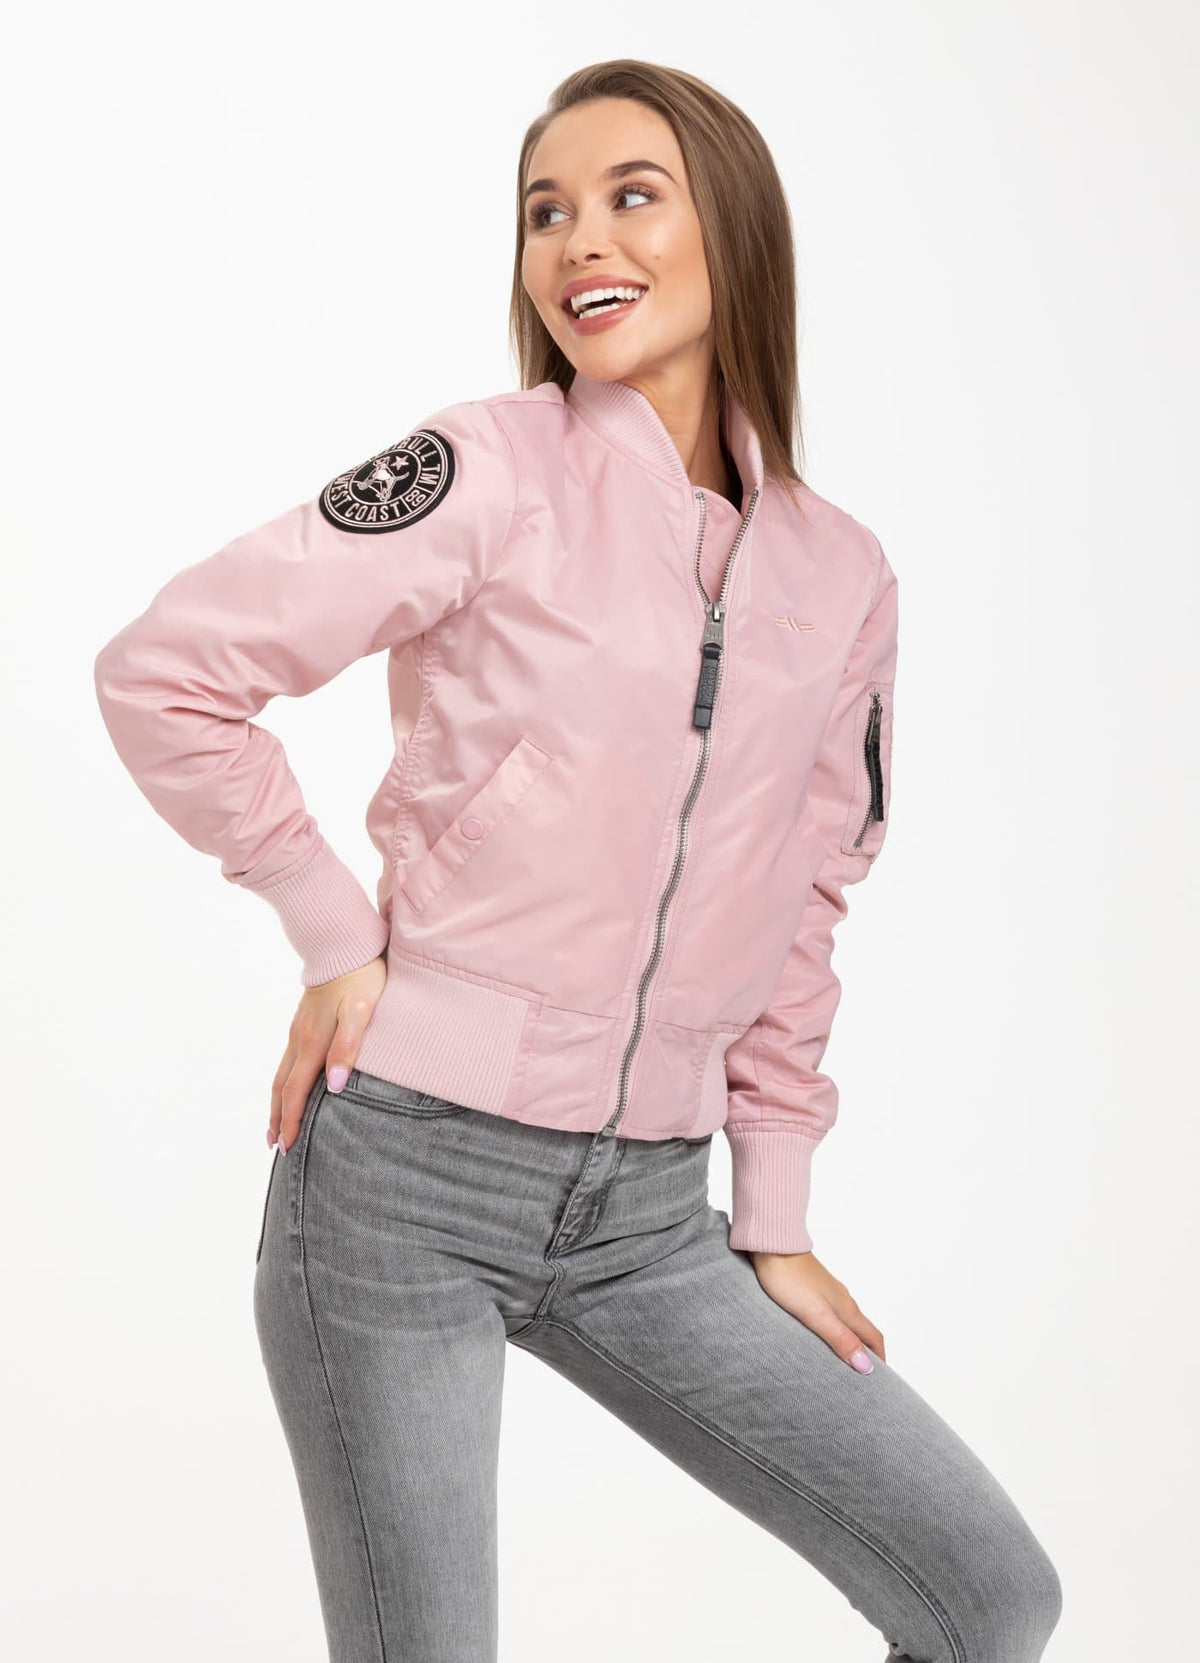 Women's Jacket GENESSE 2 Pink - Pitbull West Coast International Store 